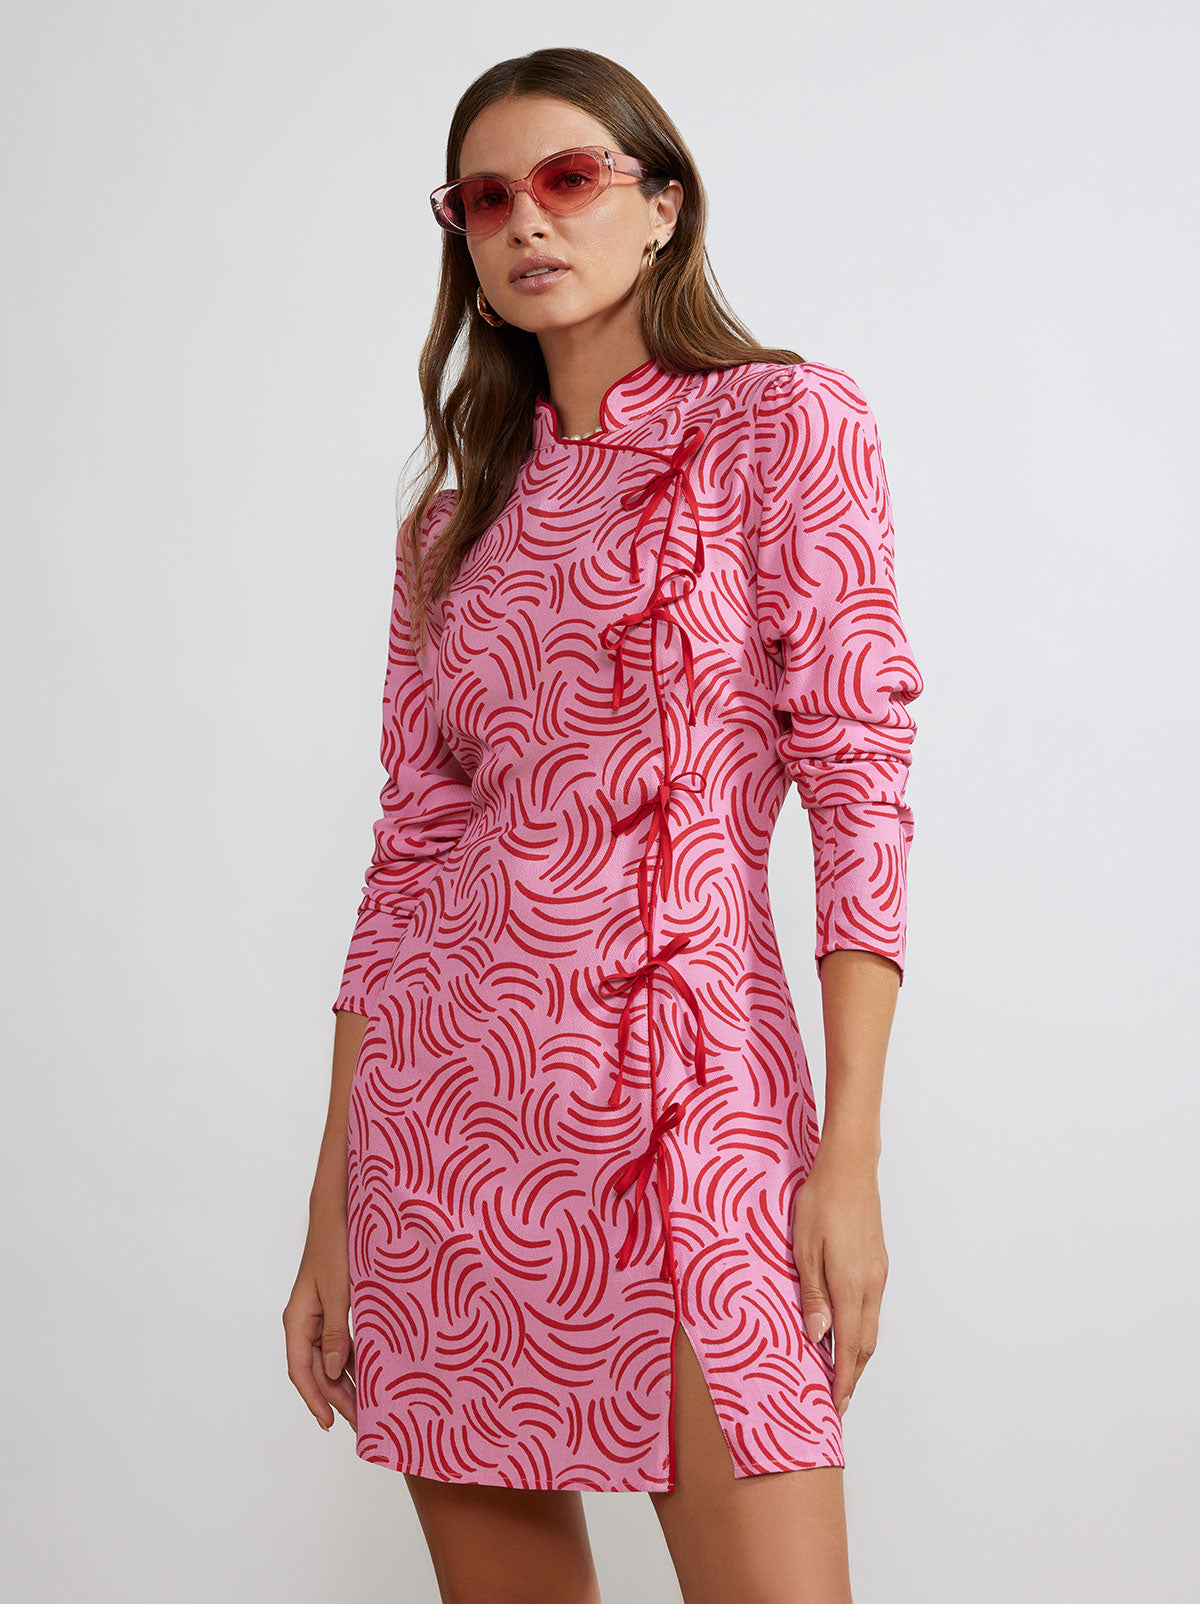 Allegra Pink Geo Mini Dress | KITRI Studio